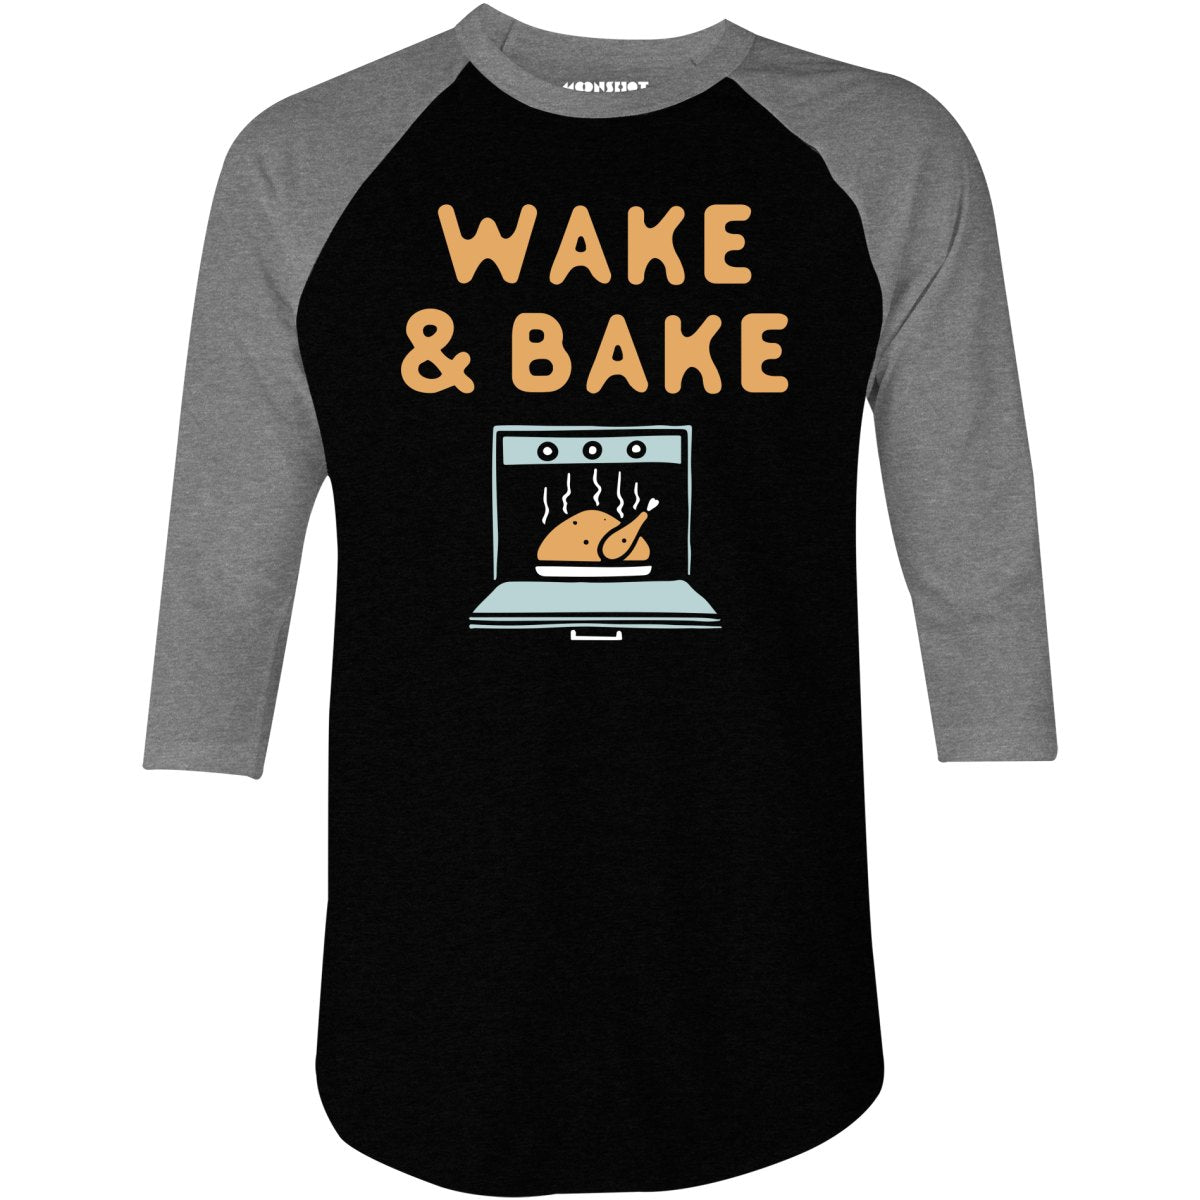 Wake & Bake - 3/4 Sleeve Raglan T-Shirt